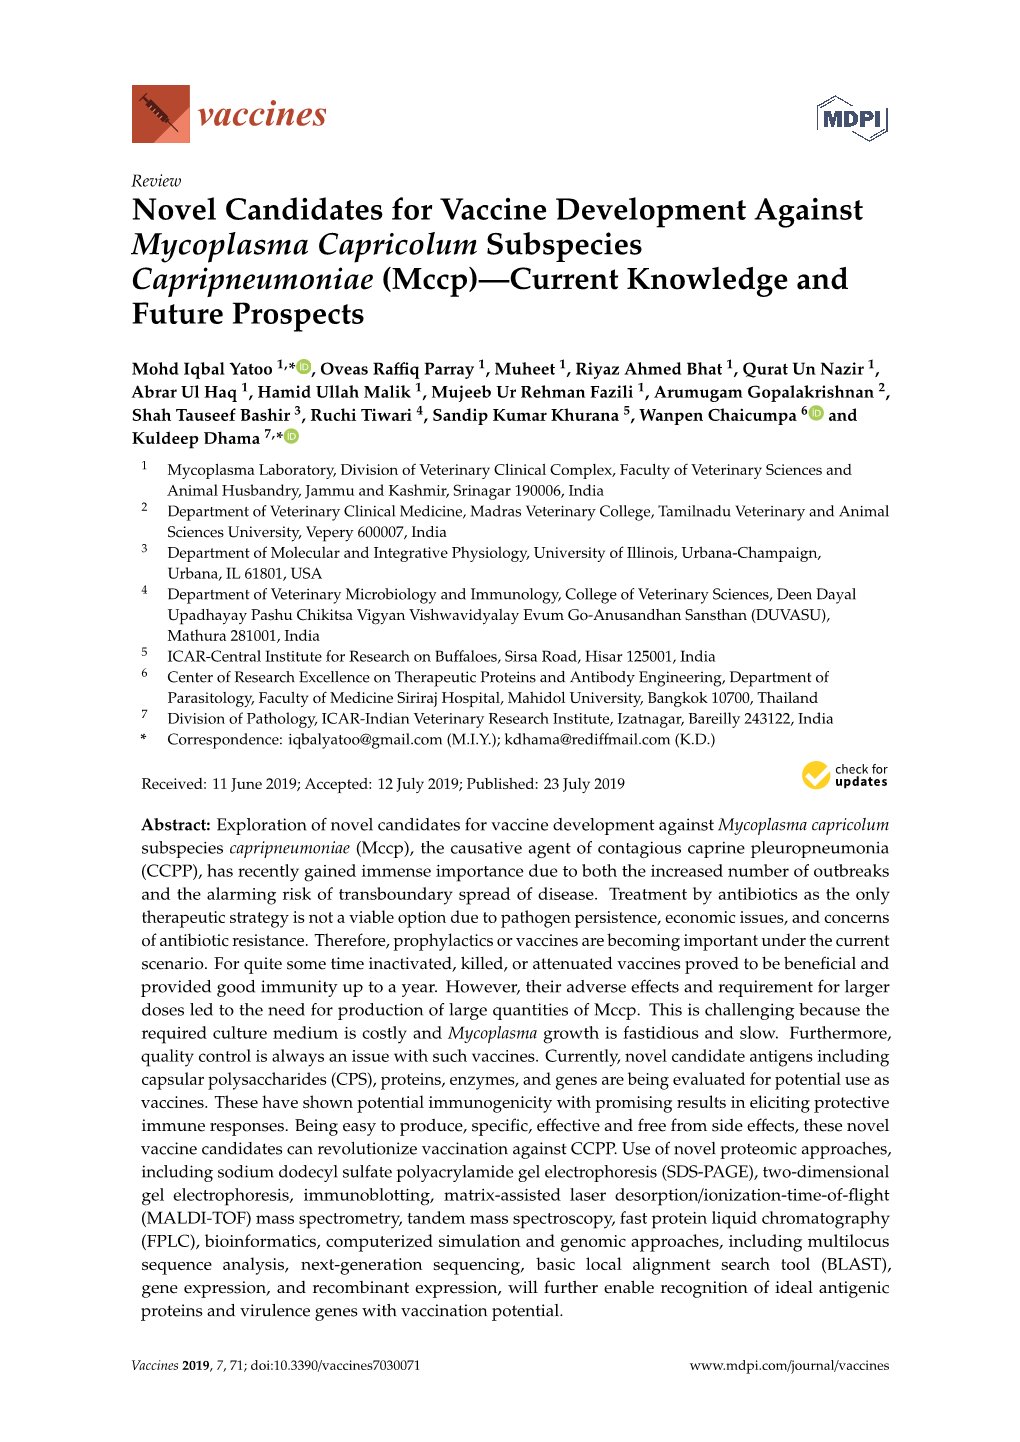 Novel Candidates for Vaccine Development Against Mycoplasma Capricolum Subspecies Capripneumoniae (Mccp)—Current Knowledge and Future Prospects